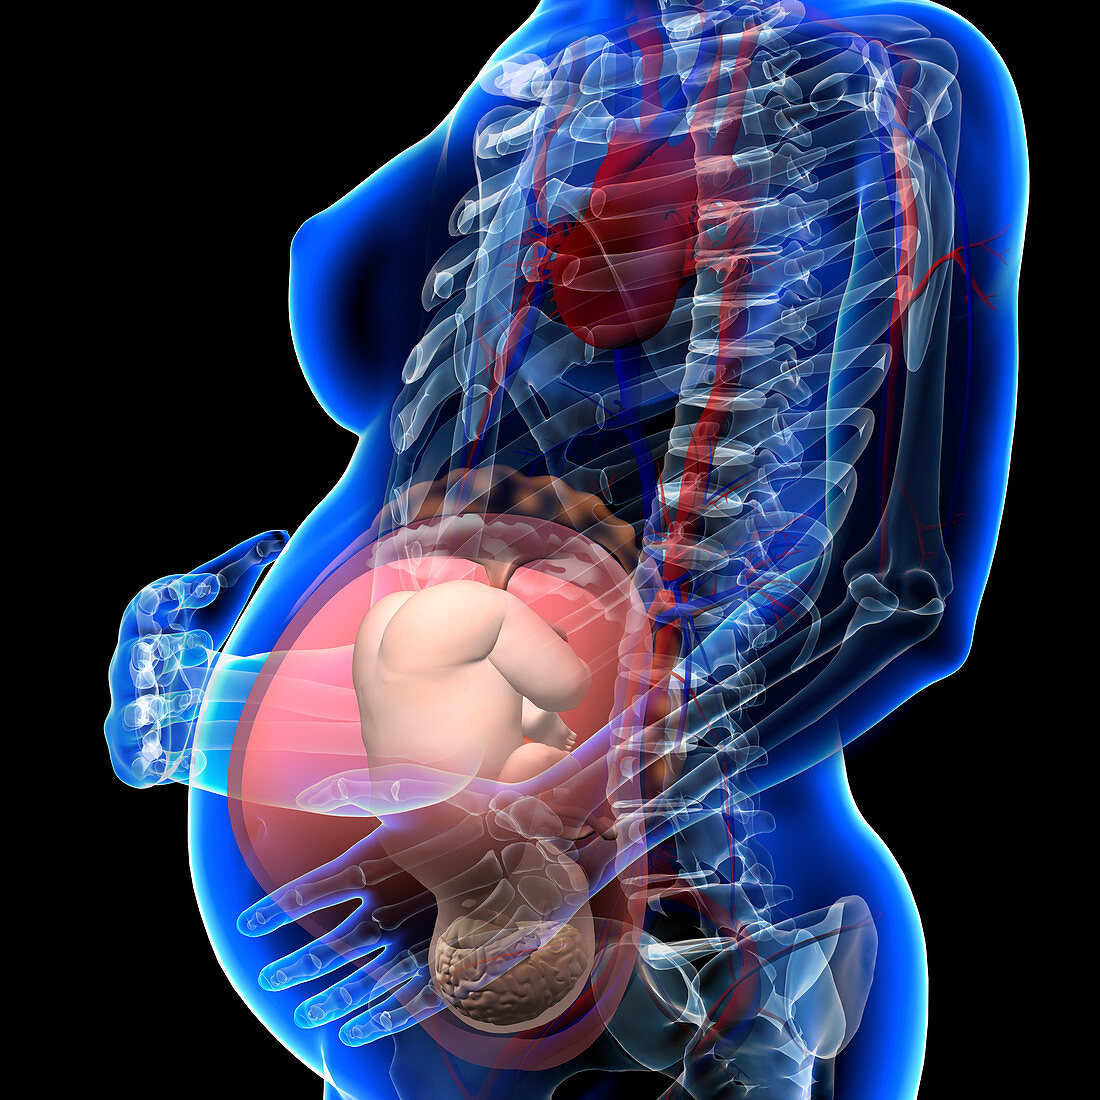 Pregnant woman, illustration